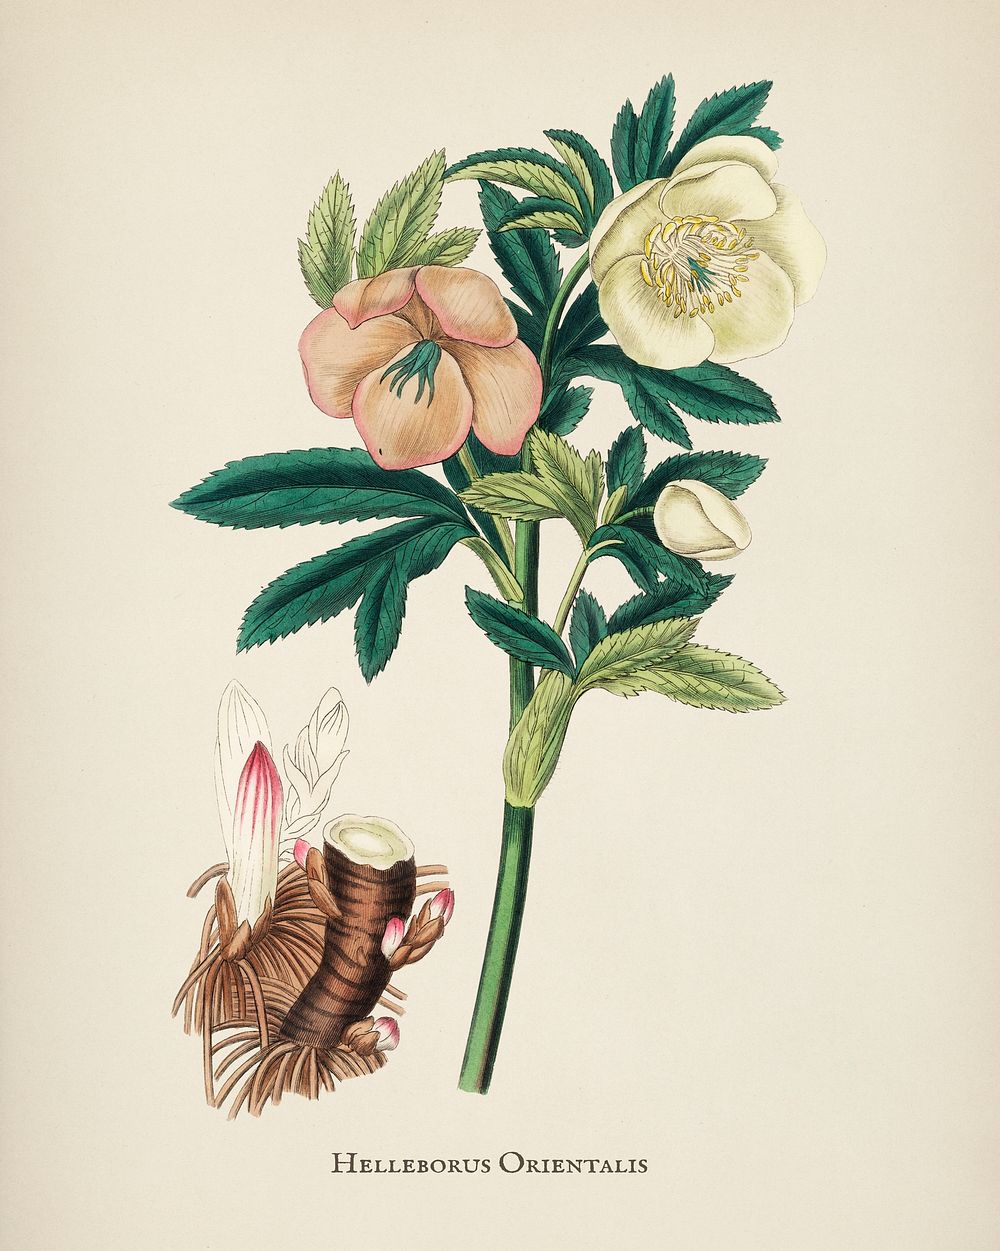 Hellebore (Helleborus orientalis) illustration from Medical Botany (1836) by John Stephenson and James Morss Churchill.